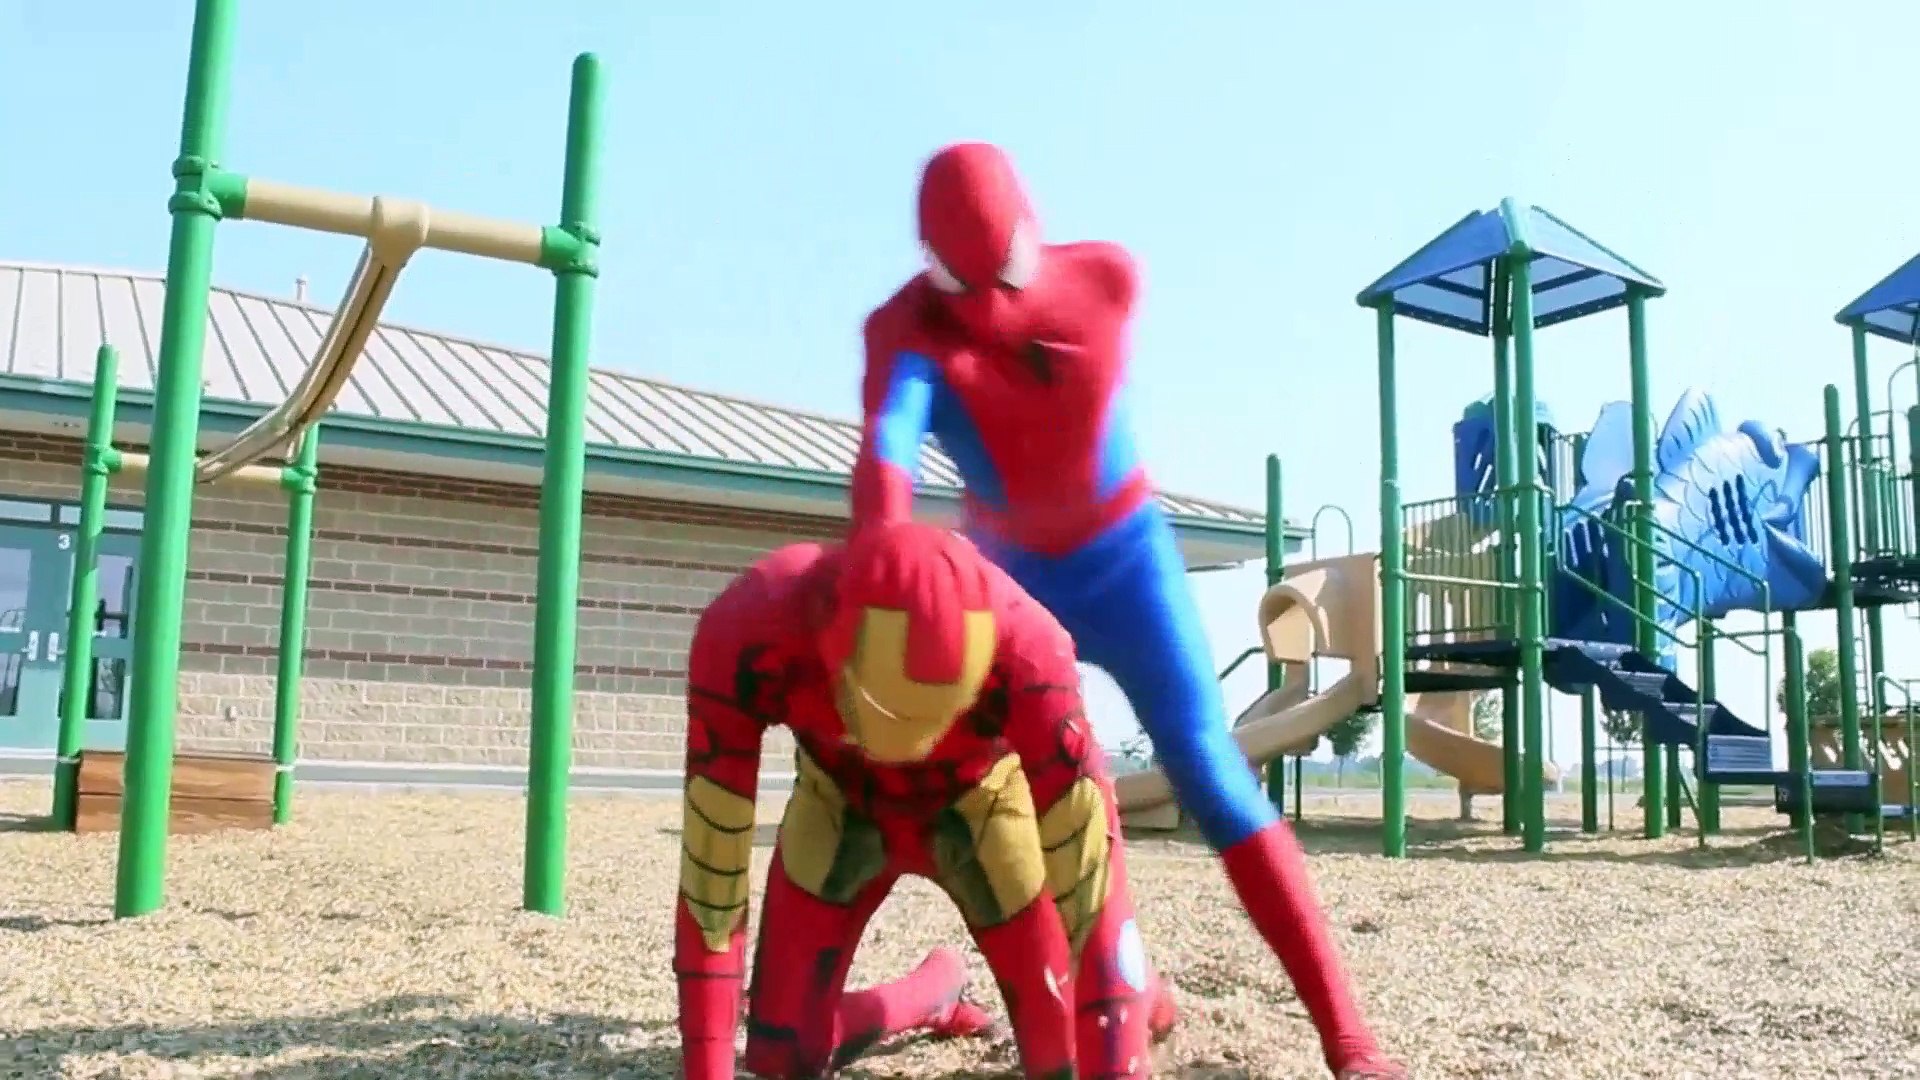 Spiderman vs Iron Man vs Superman vs Hulk - Real Life Superhero Fight -  Death Match! | Superheroes | Spiderman | Superman | Frozen Elsa | Joker -  video Dailymotion